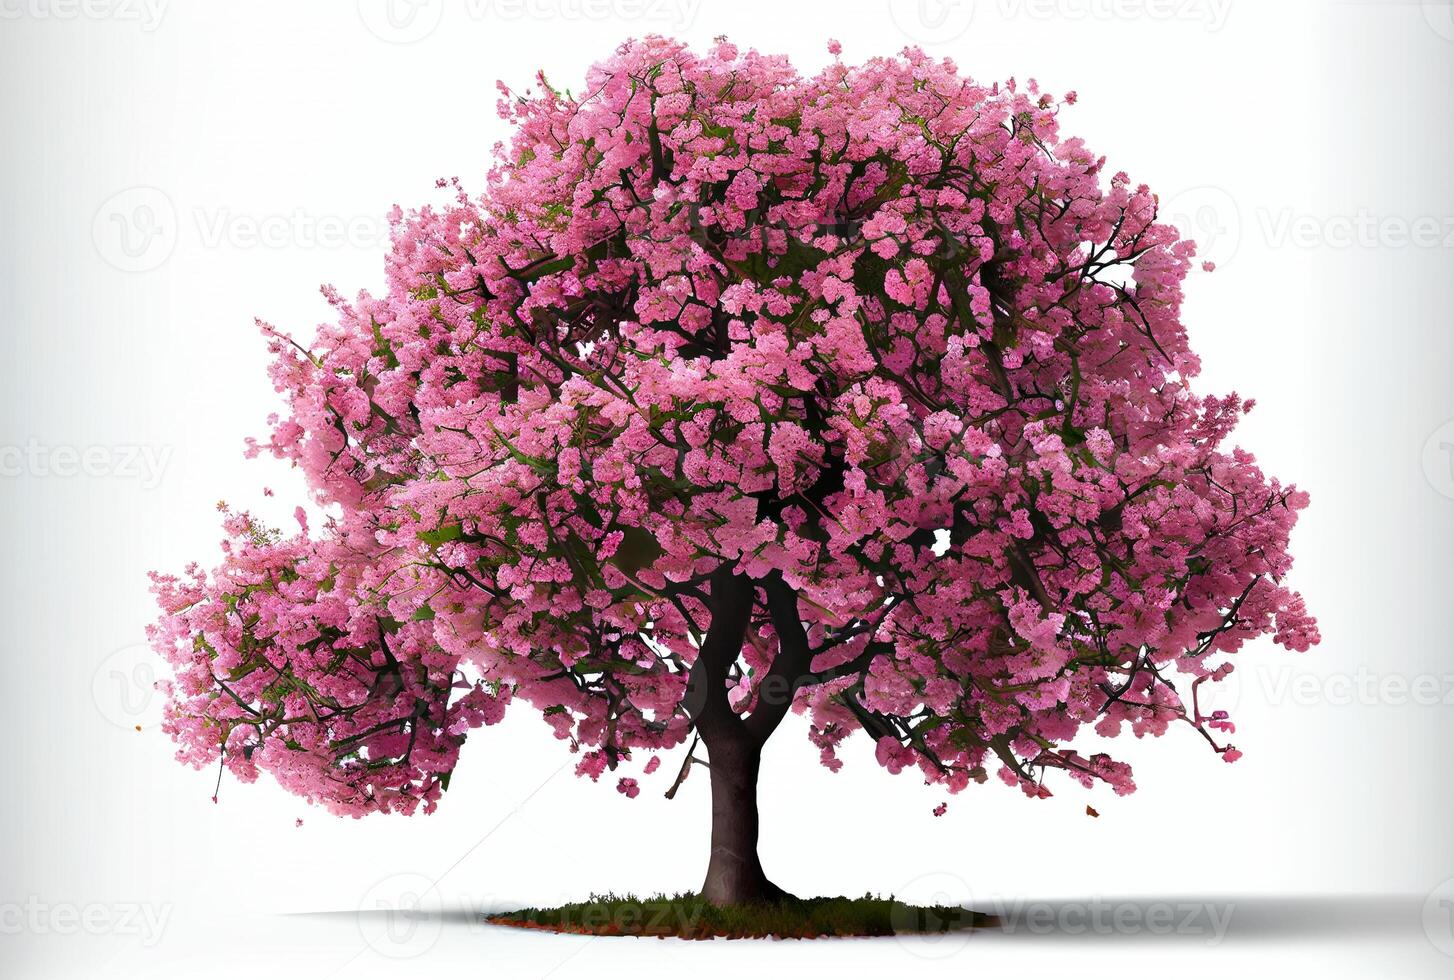 Large pink Cherry Blossom tree on white background. Digital art style. photo